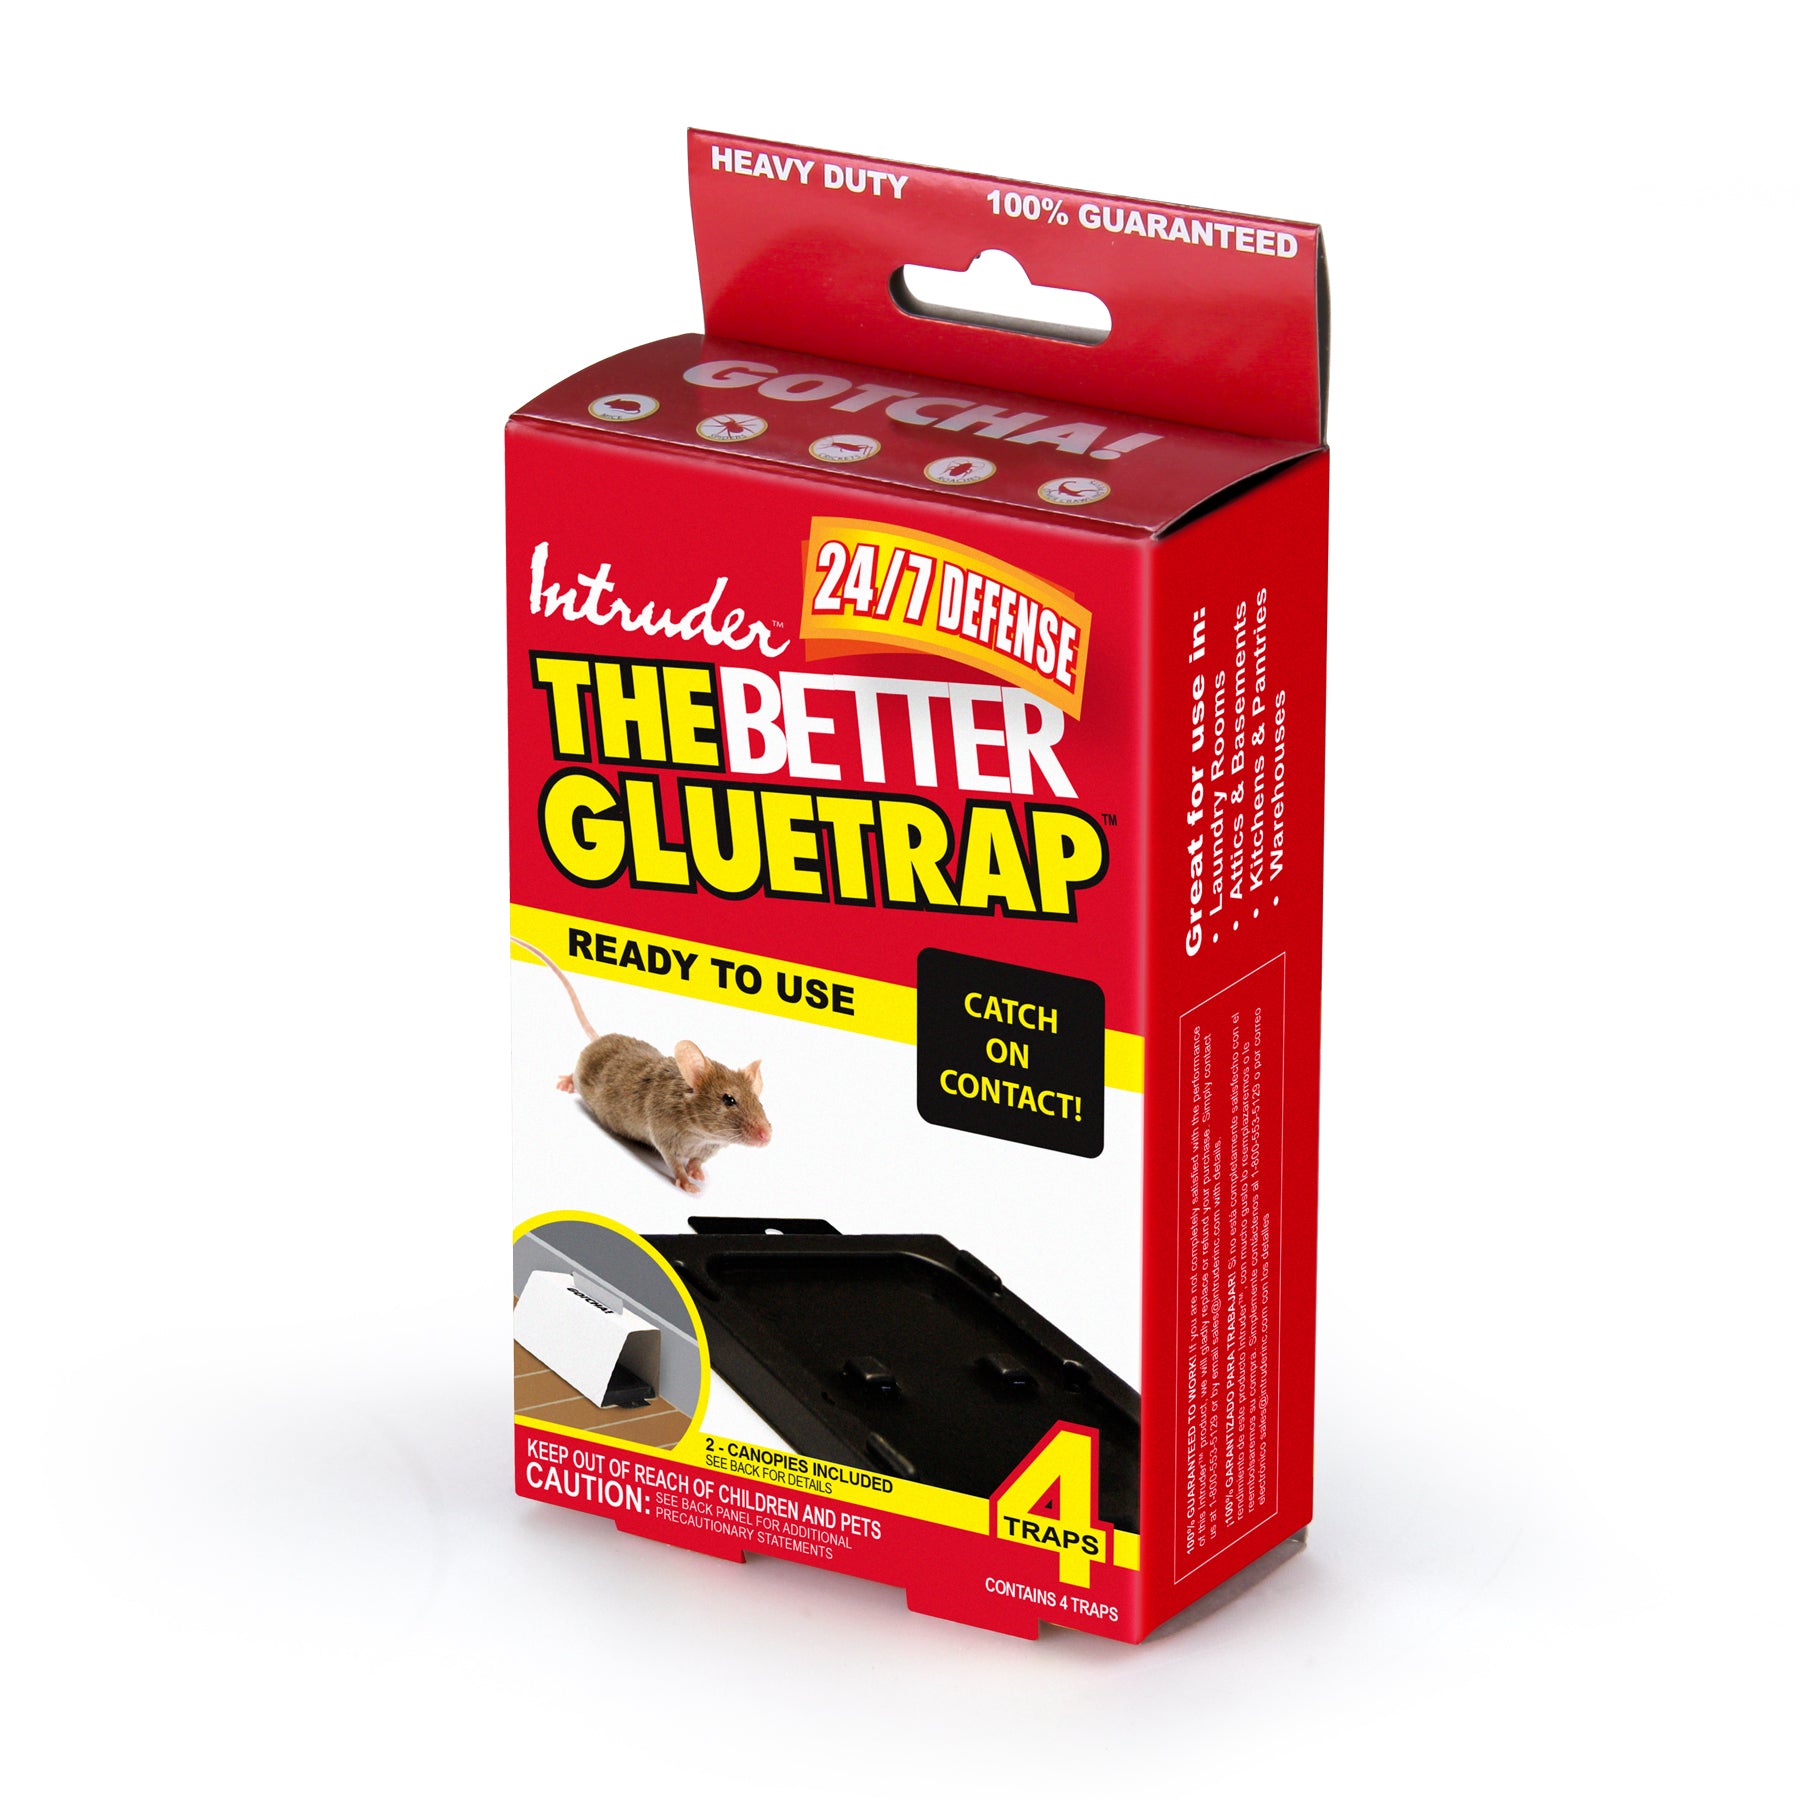 Mouse Killer Rat Adhesive Glue Traps Small Plastic Board Animal